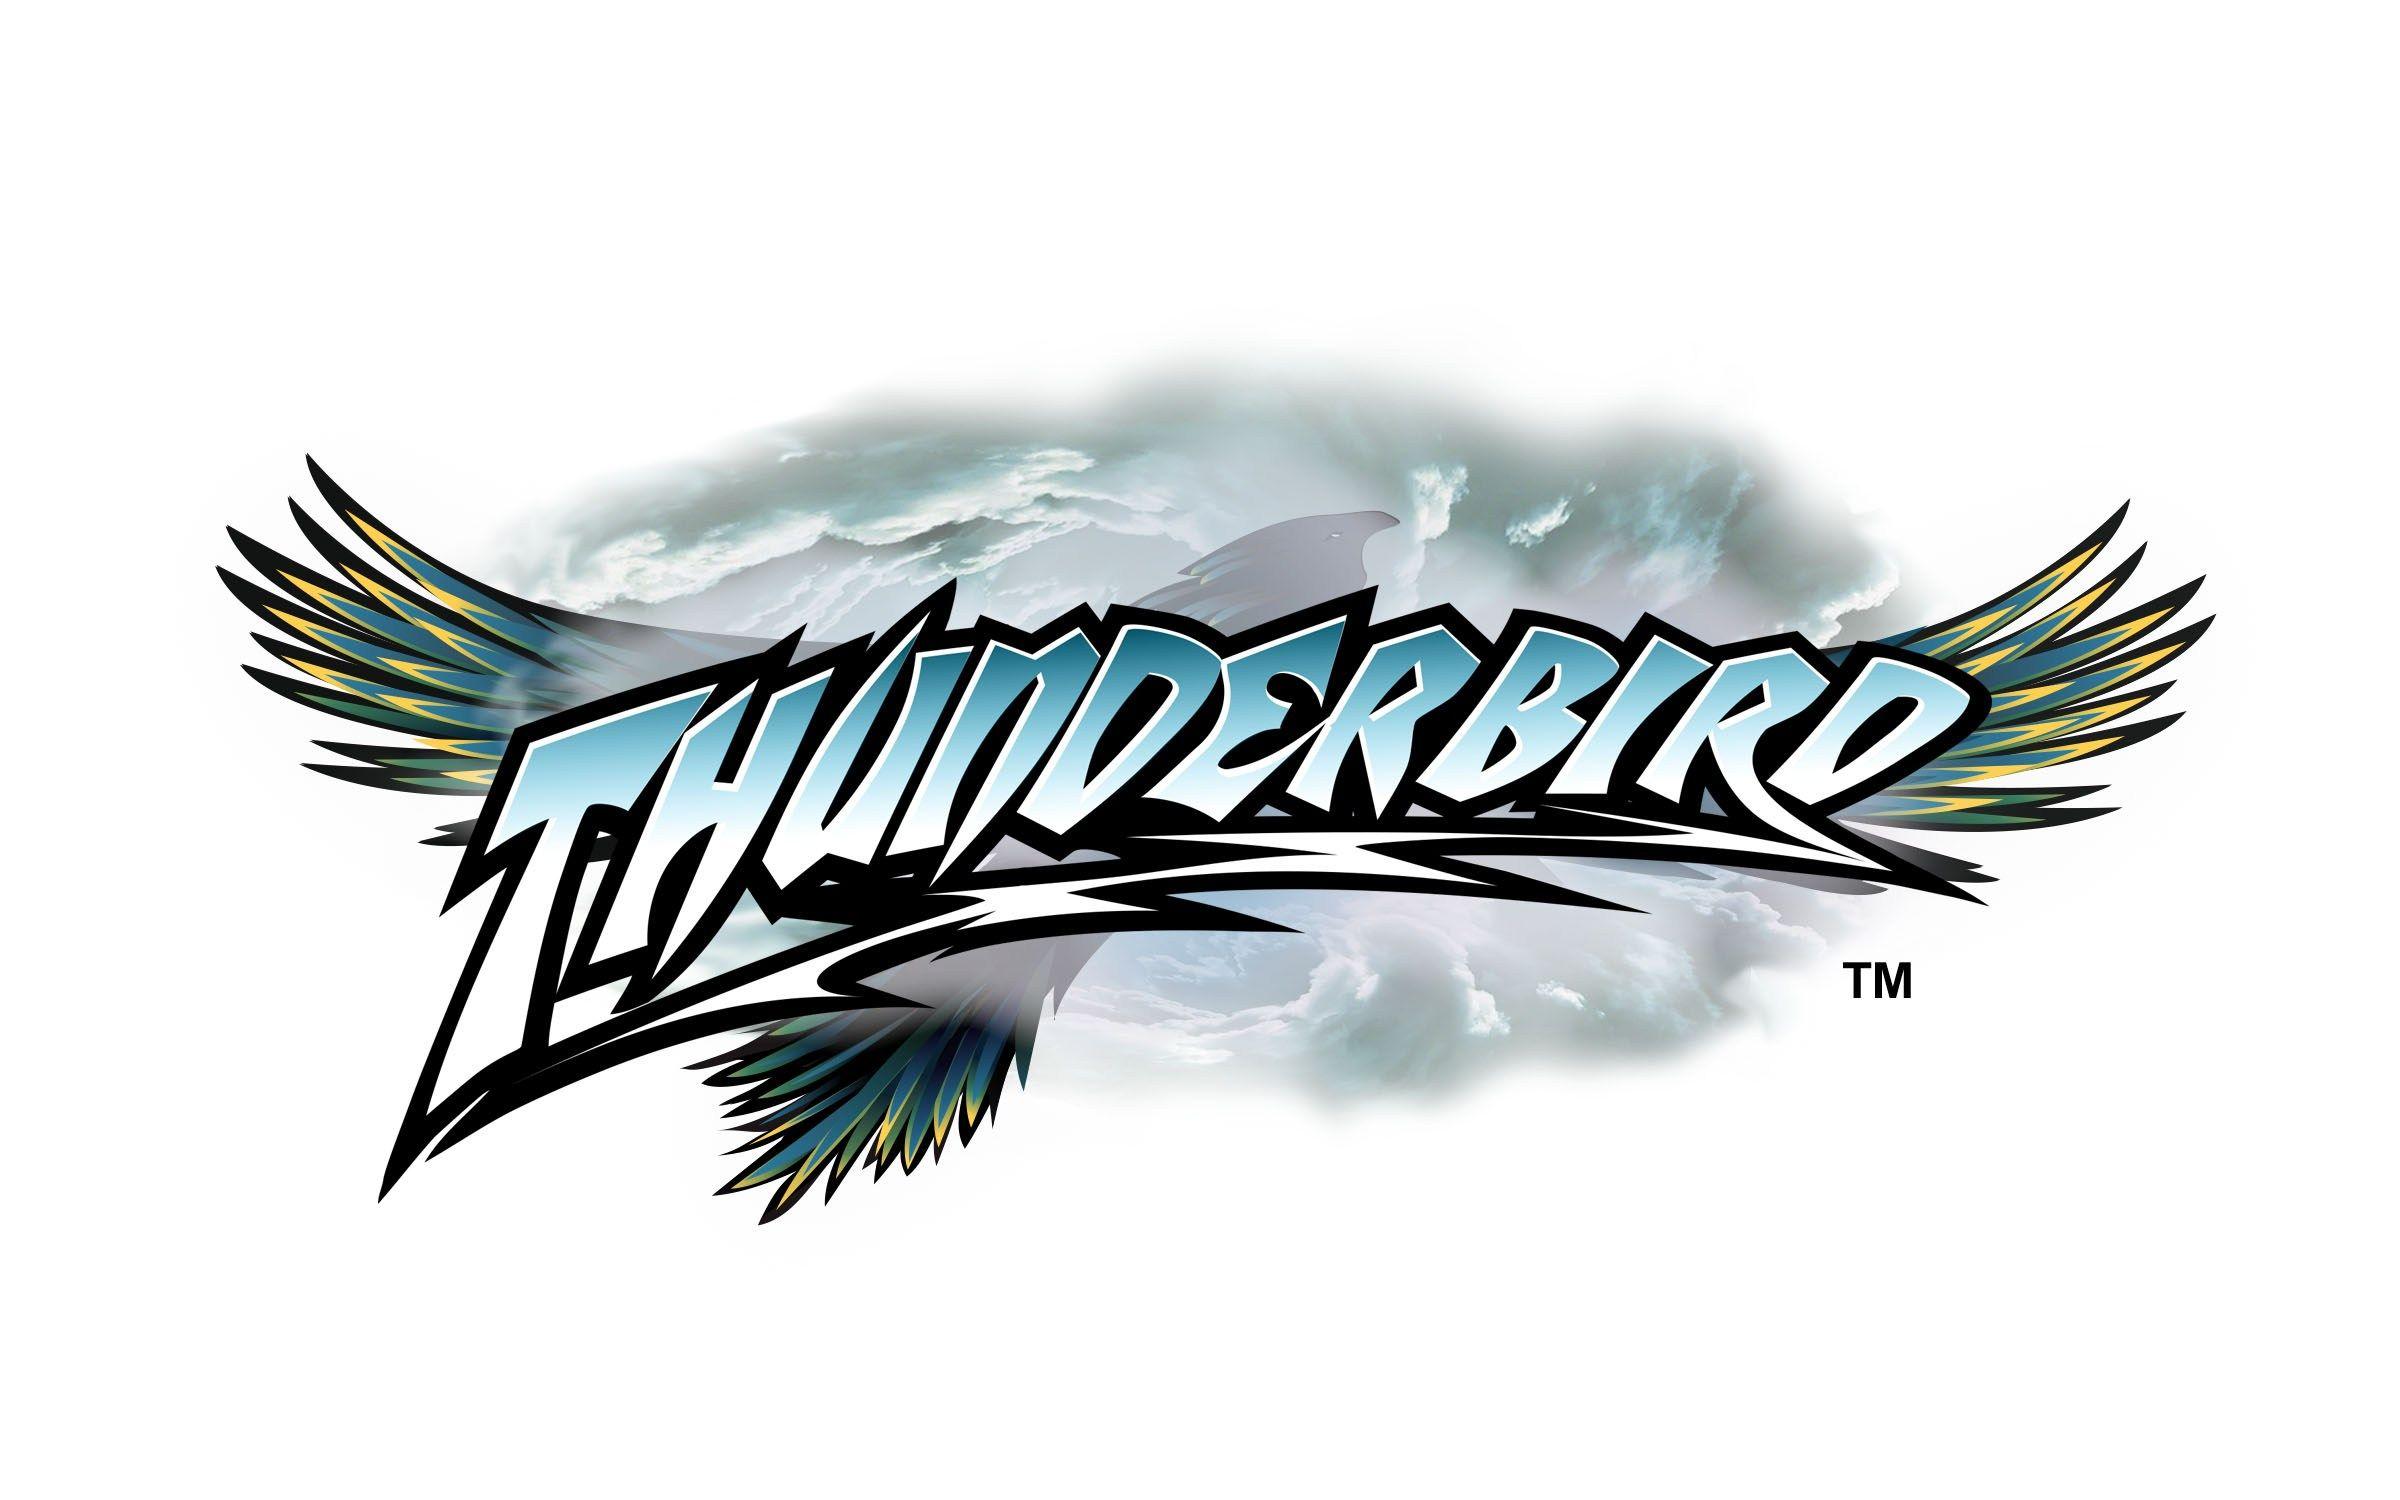 Thunderbird Logo - Thunderbird launches next year at Holiday World